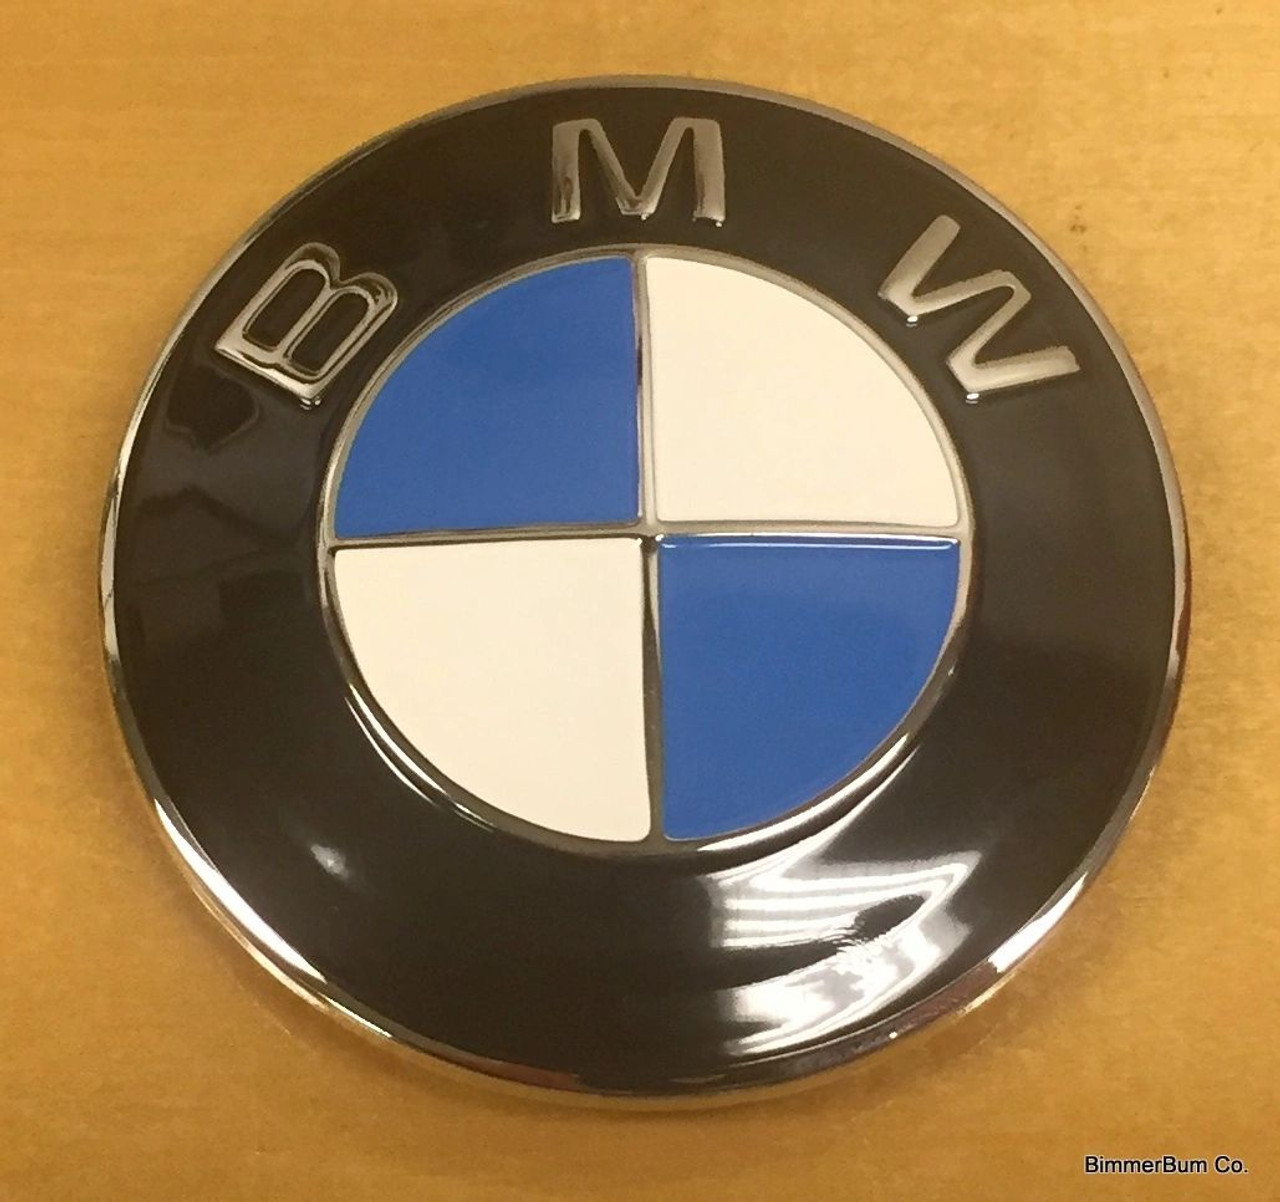 Emblema BMW Original Con Pines 82mm - IRP Racing Parts Shop